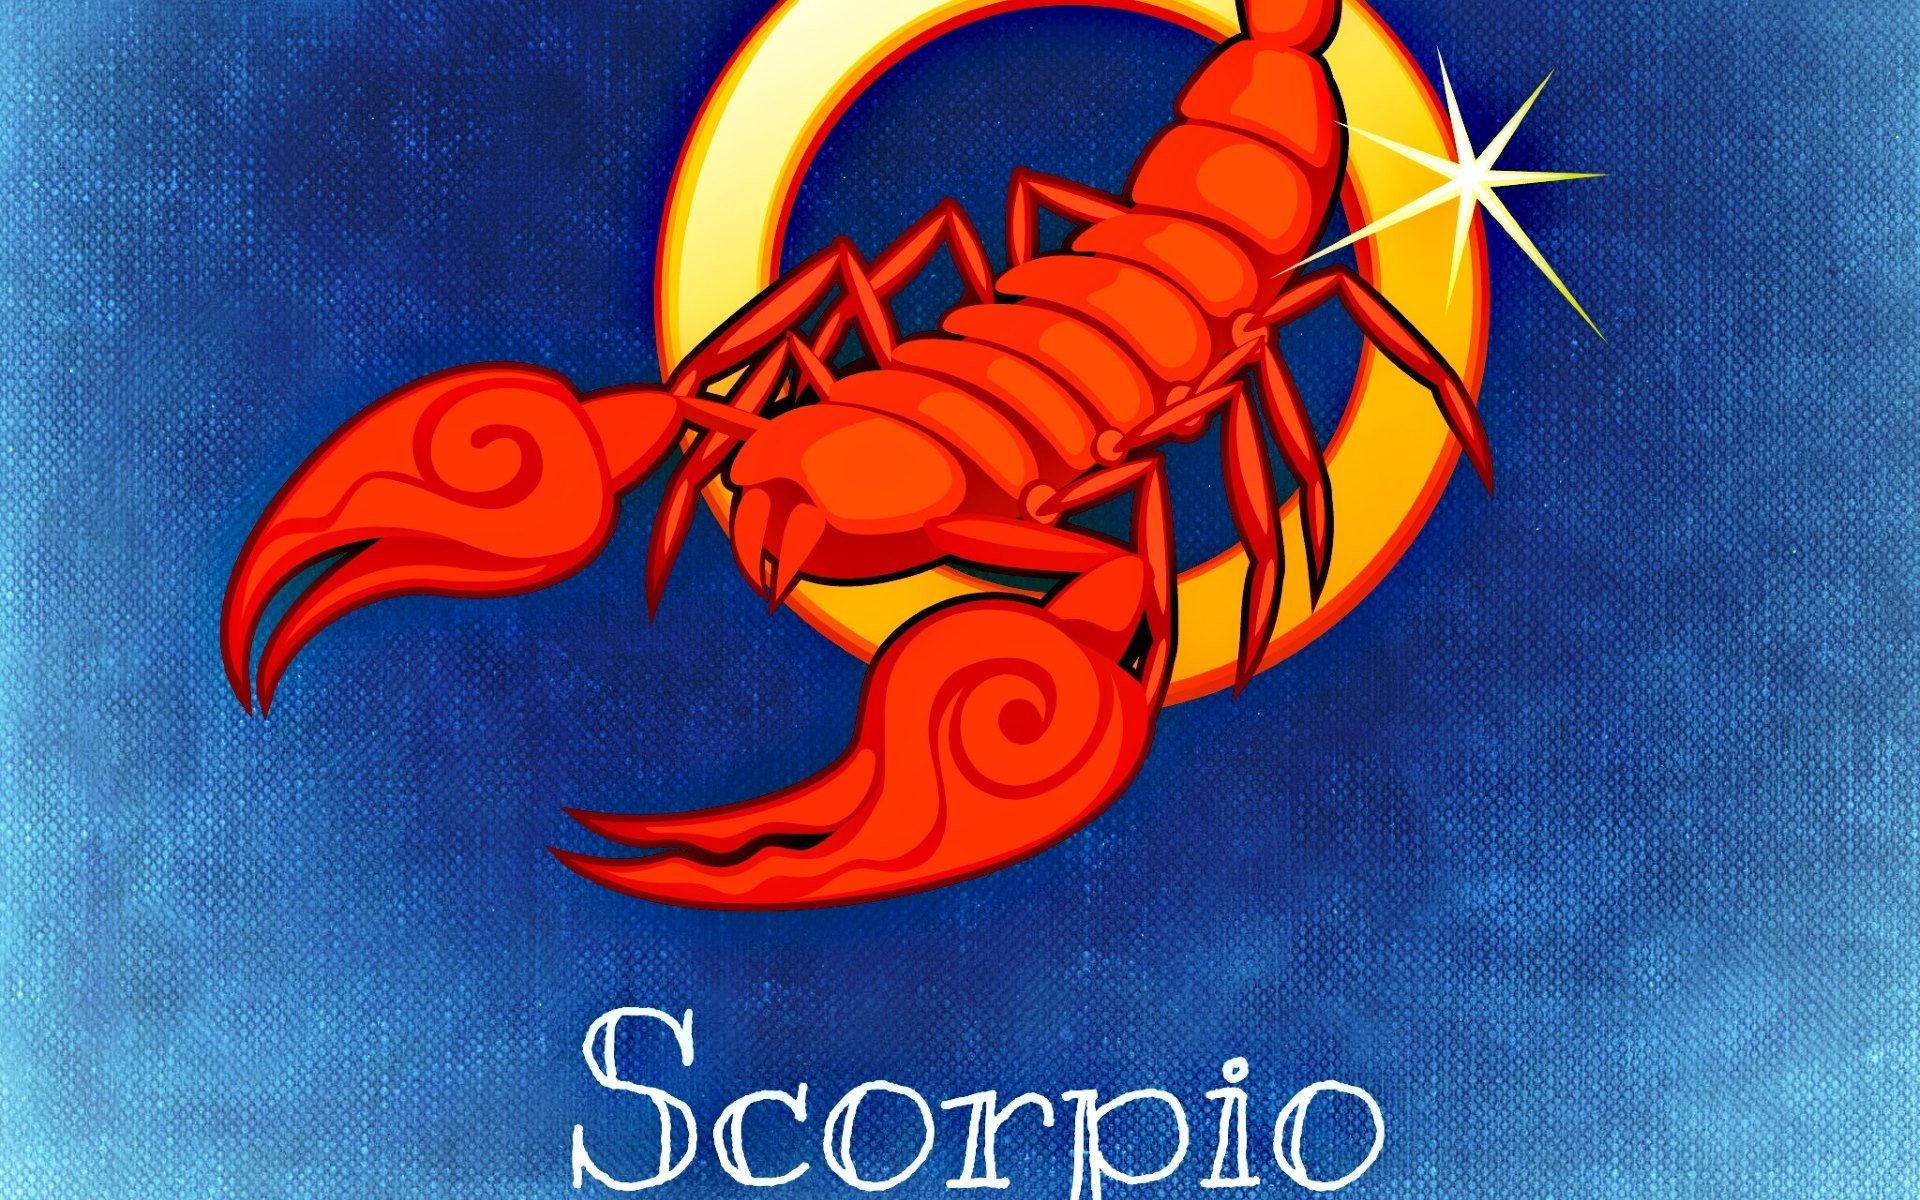 Скорпион зодиак картинки. Знак зодиака Скорпион. Скорпионэ знак зодиака. Скорпион Зодиак. Скорпион картинки.